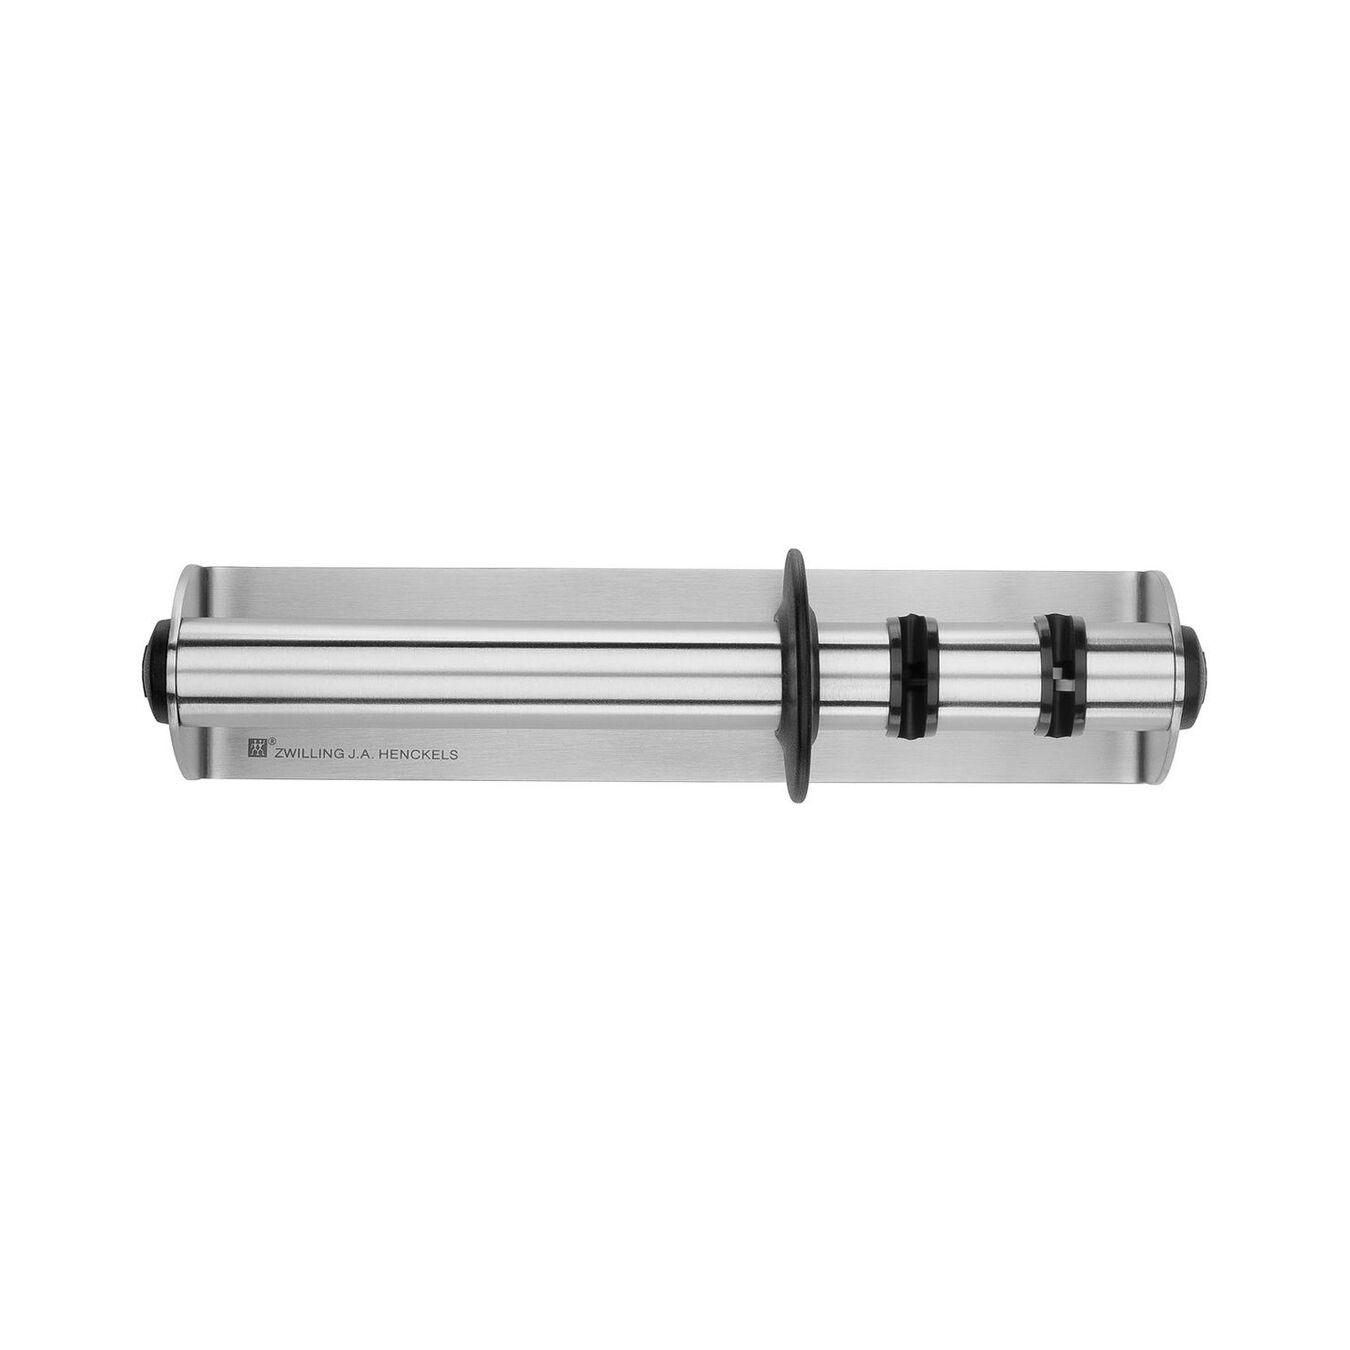 Knife sharpener, 19 cm | silver | stainless steel,,large 2